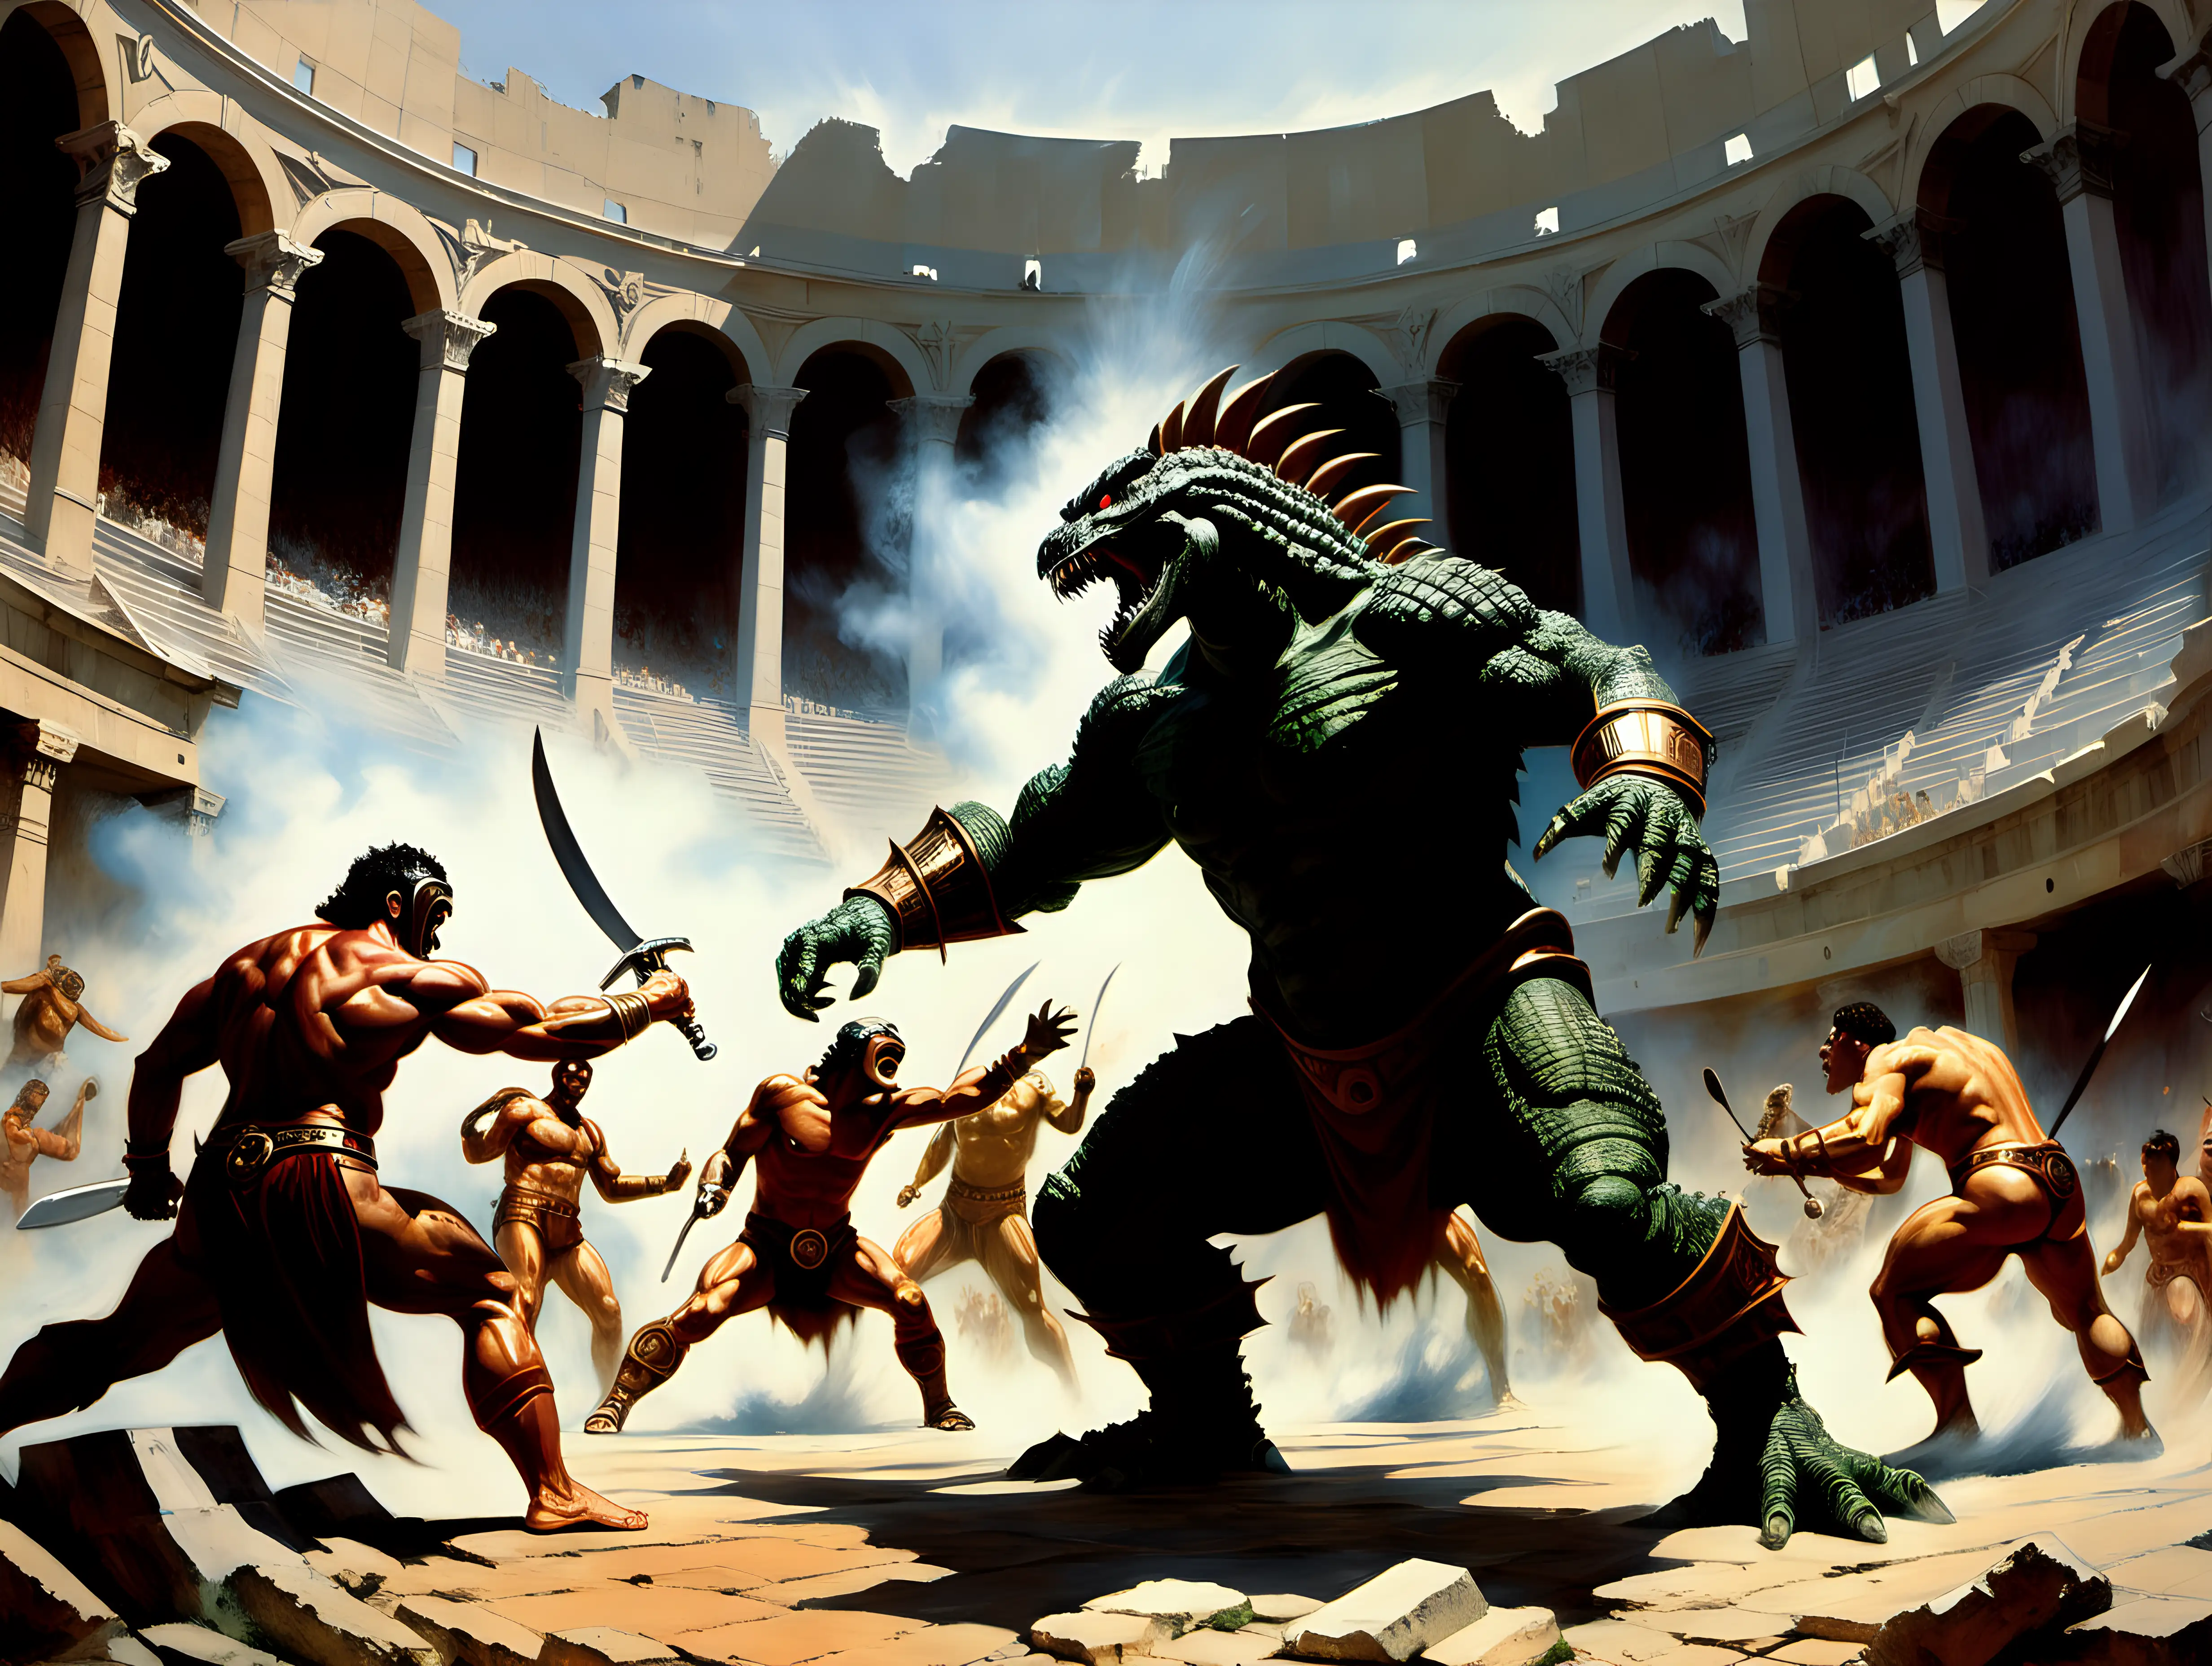 Gladiators fighting Godzilla in ancient Greek coliseum Frank Frazetta style